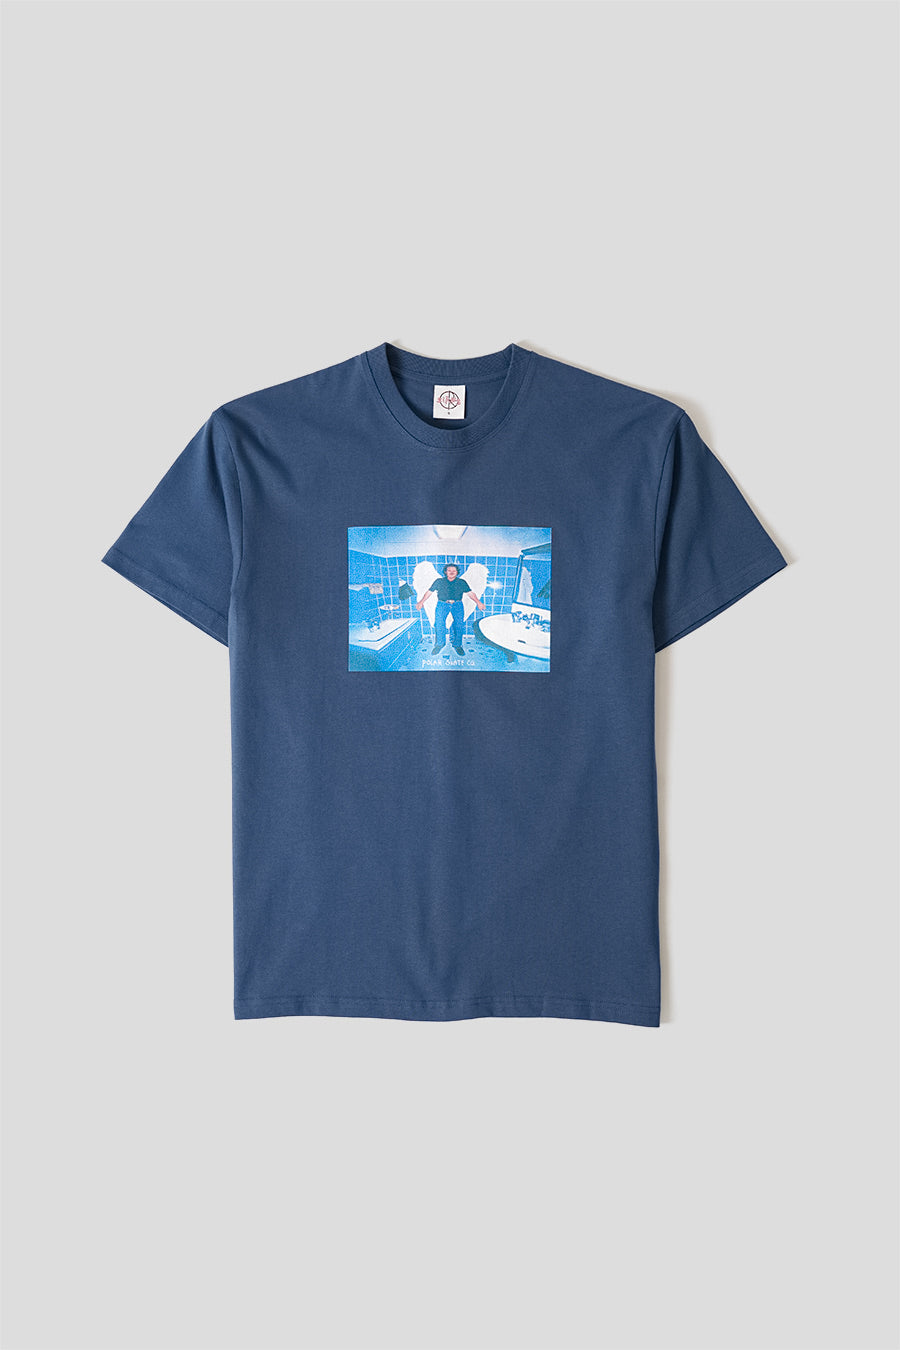 Polar Skate Co. - BLUE ANGEL MAN T-SHIRT - LE LABO STORE